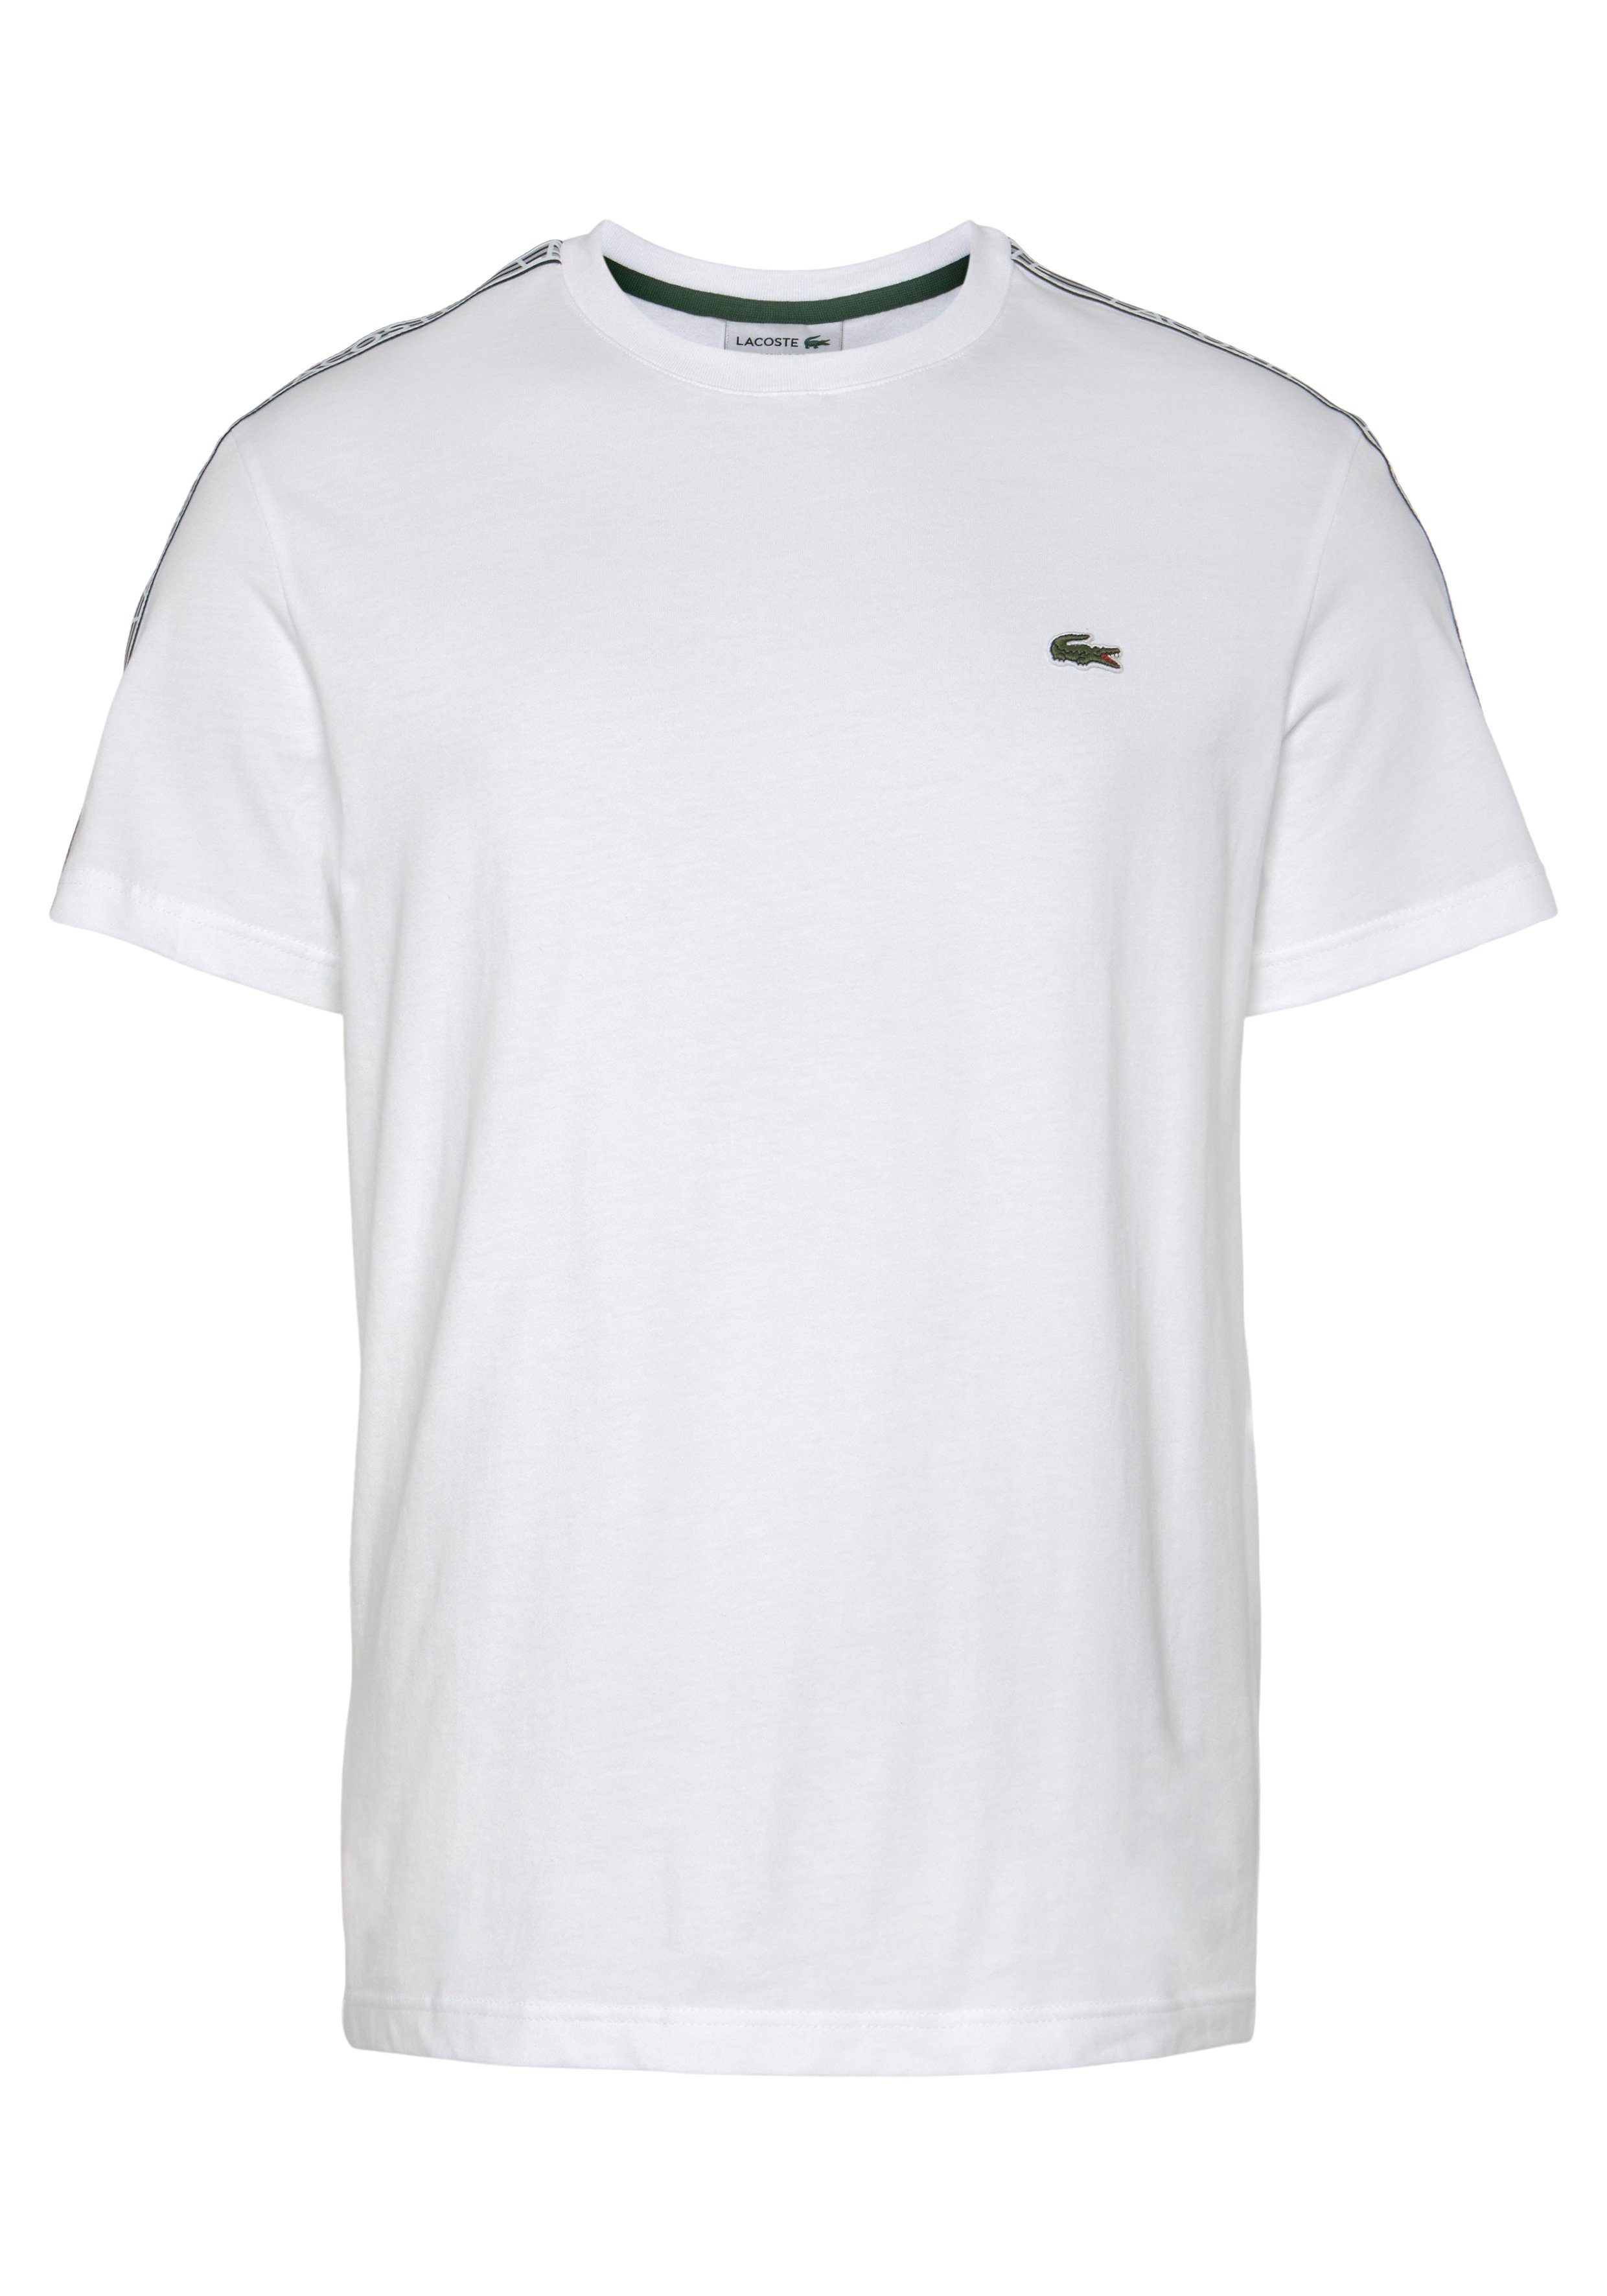 Lacoste T-Shirt mit beschriftetem Kontrastband an den Schultern white